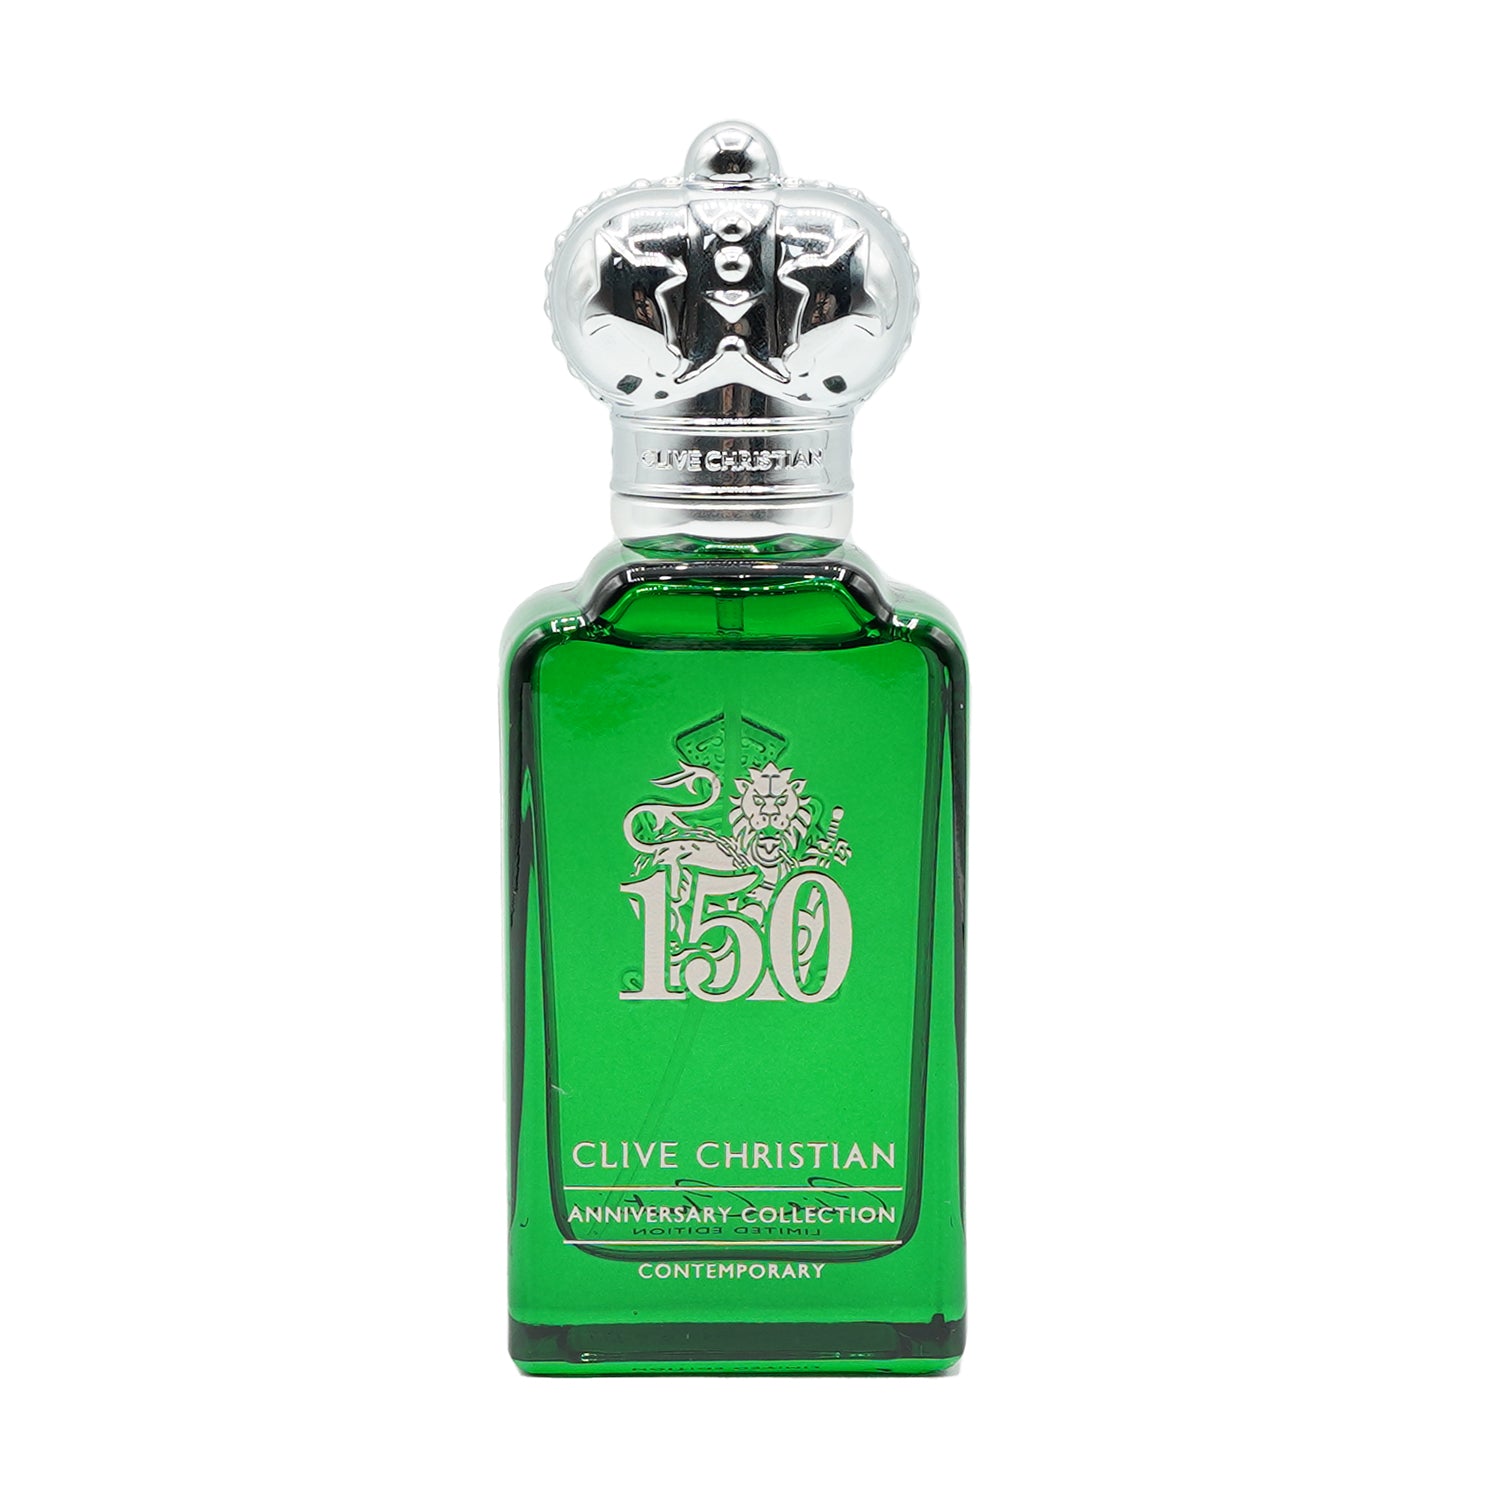 Clive Christian | 150: Contemporary Abfüllung-Parfümproben